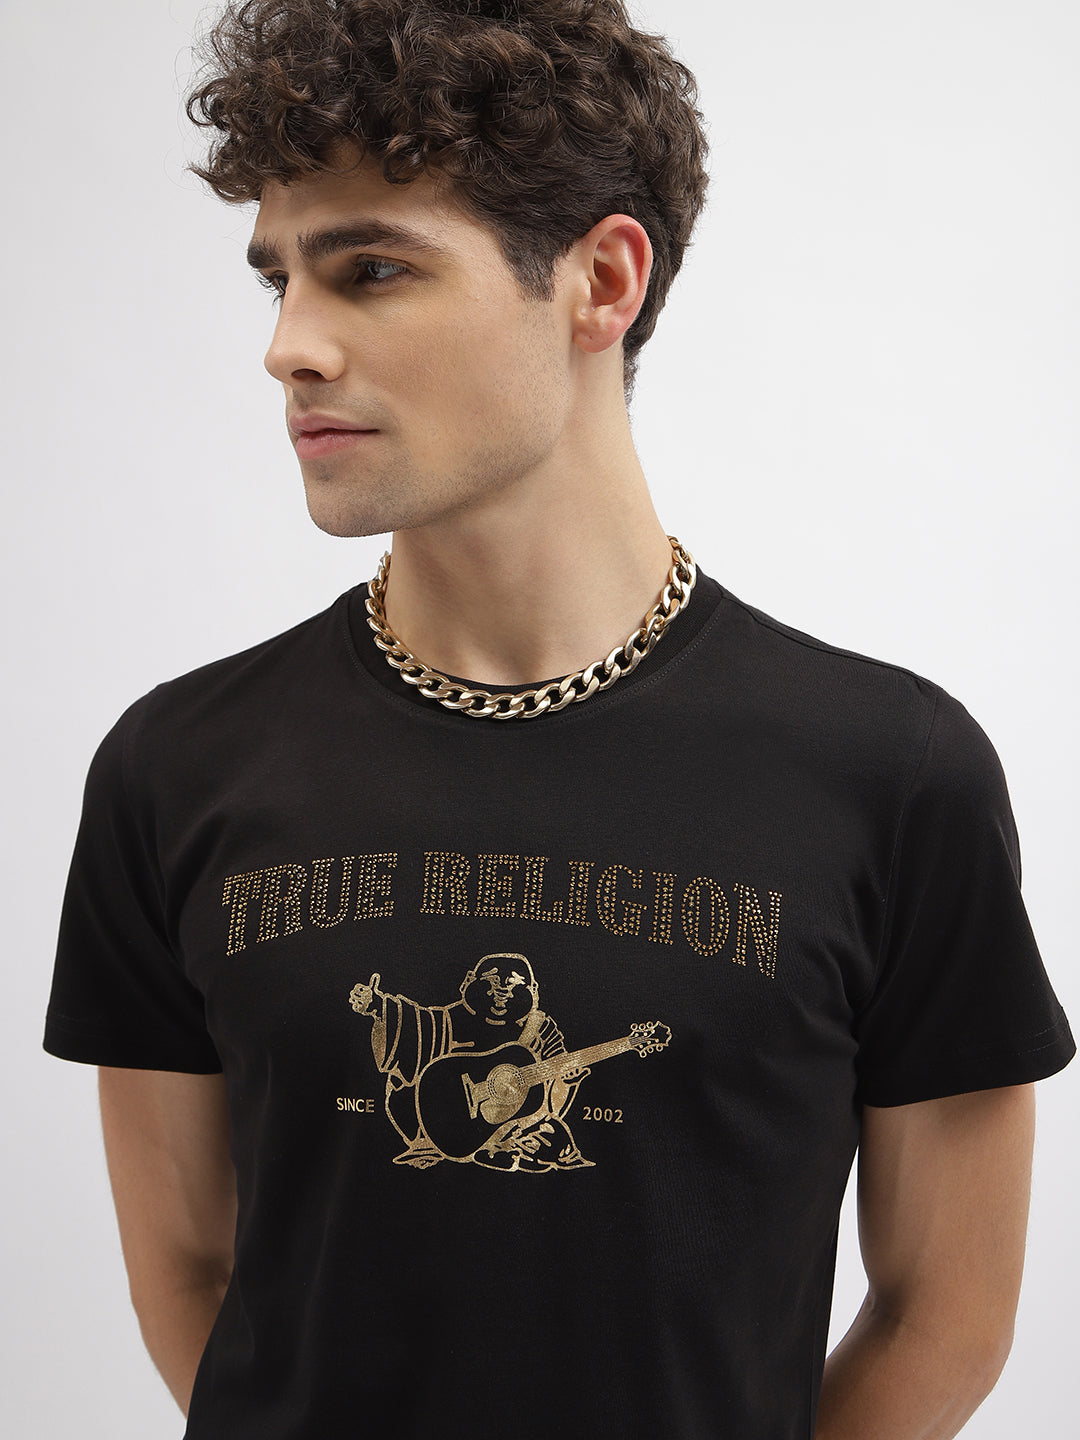 True Religion Men Black Printed Round Neck Short Sleeves T-Shirt